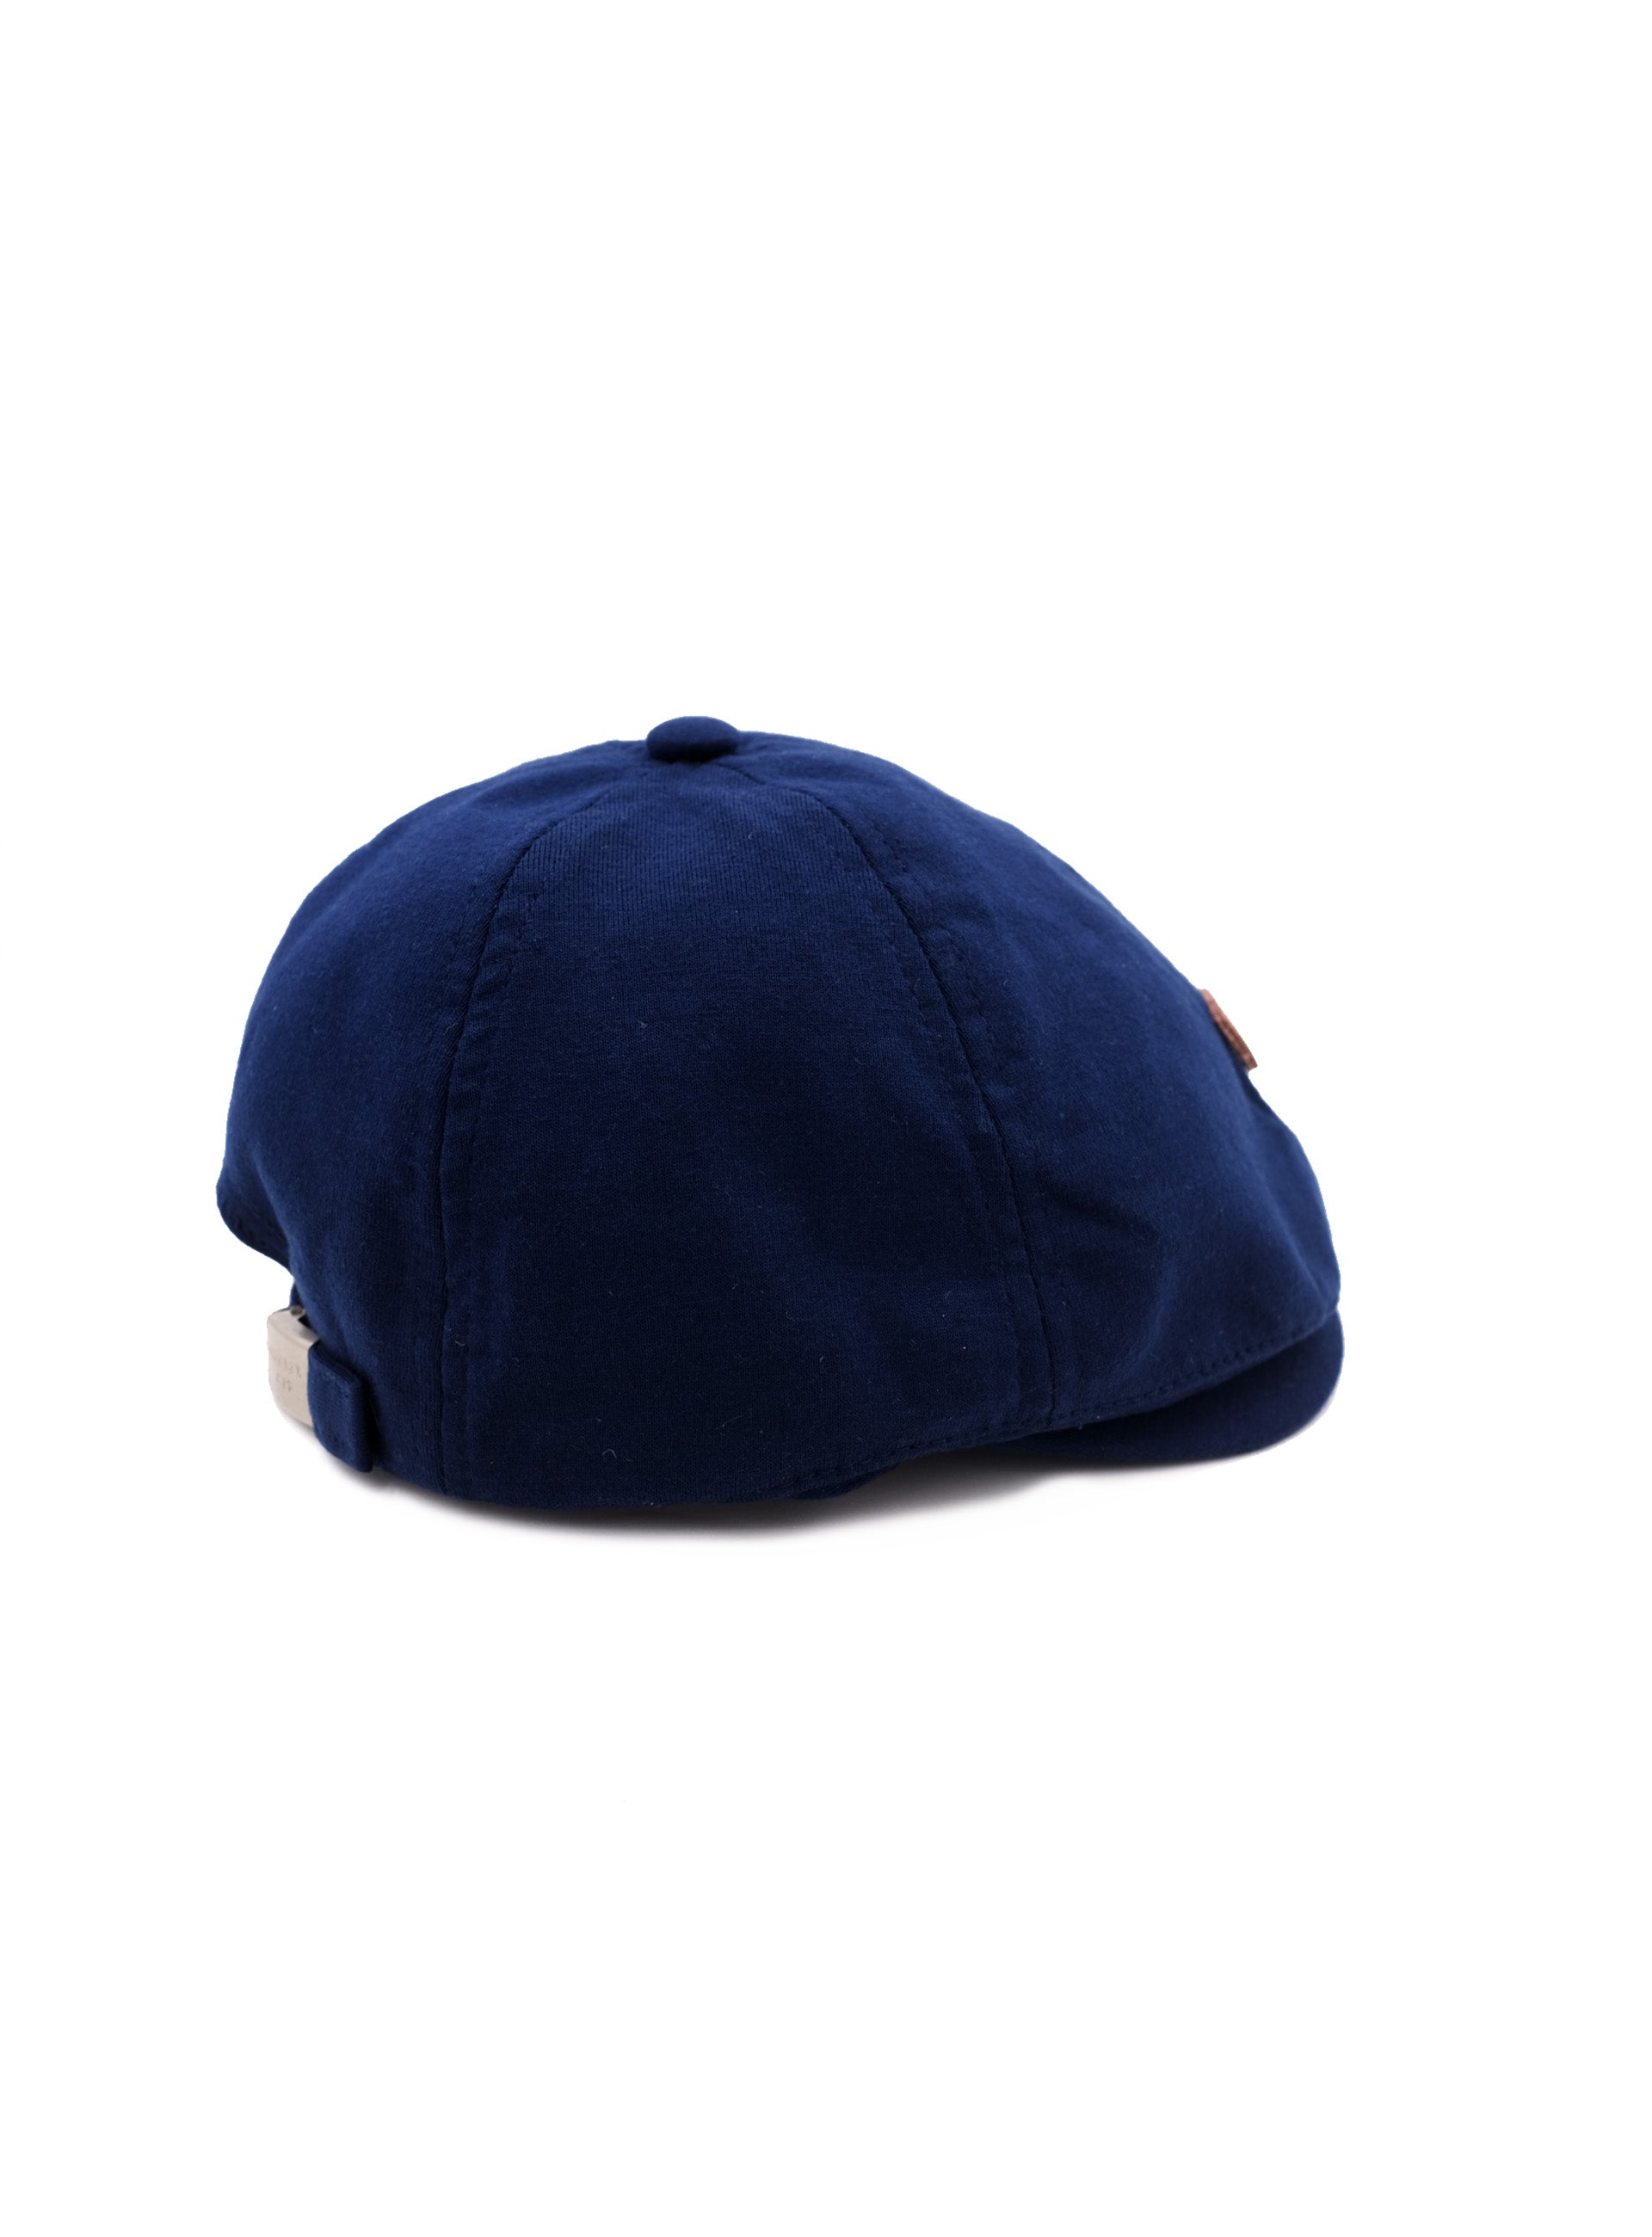 indigo blue beret with adjustable strap